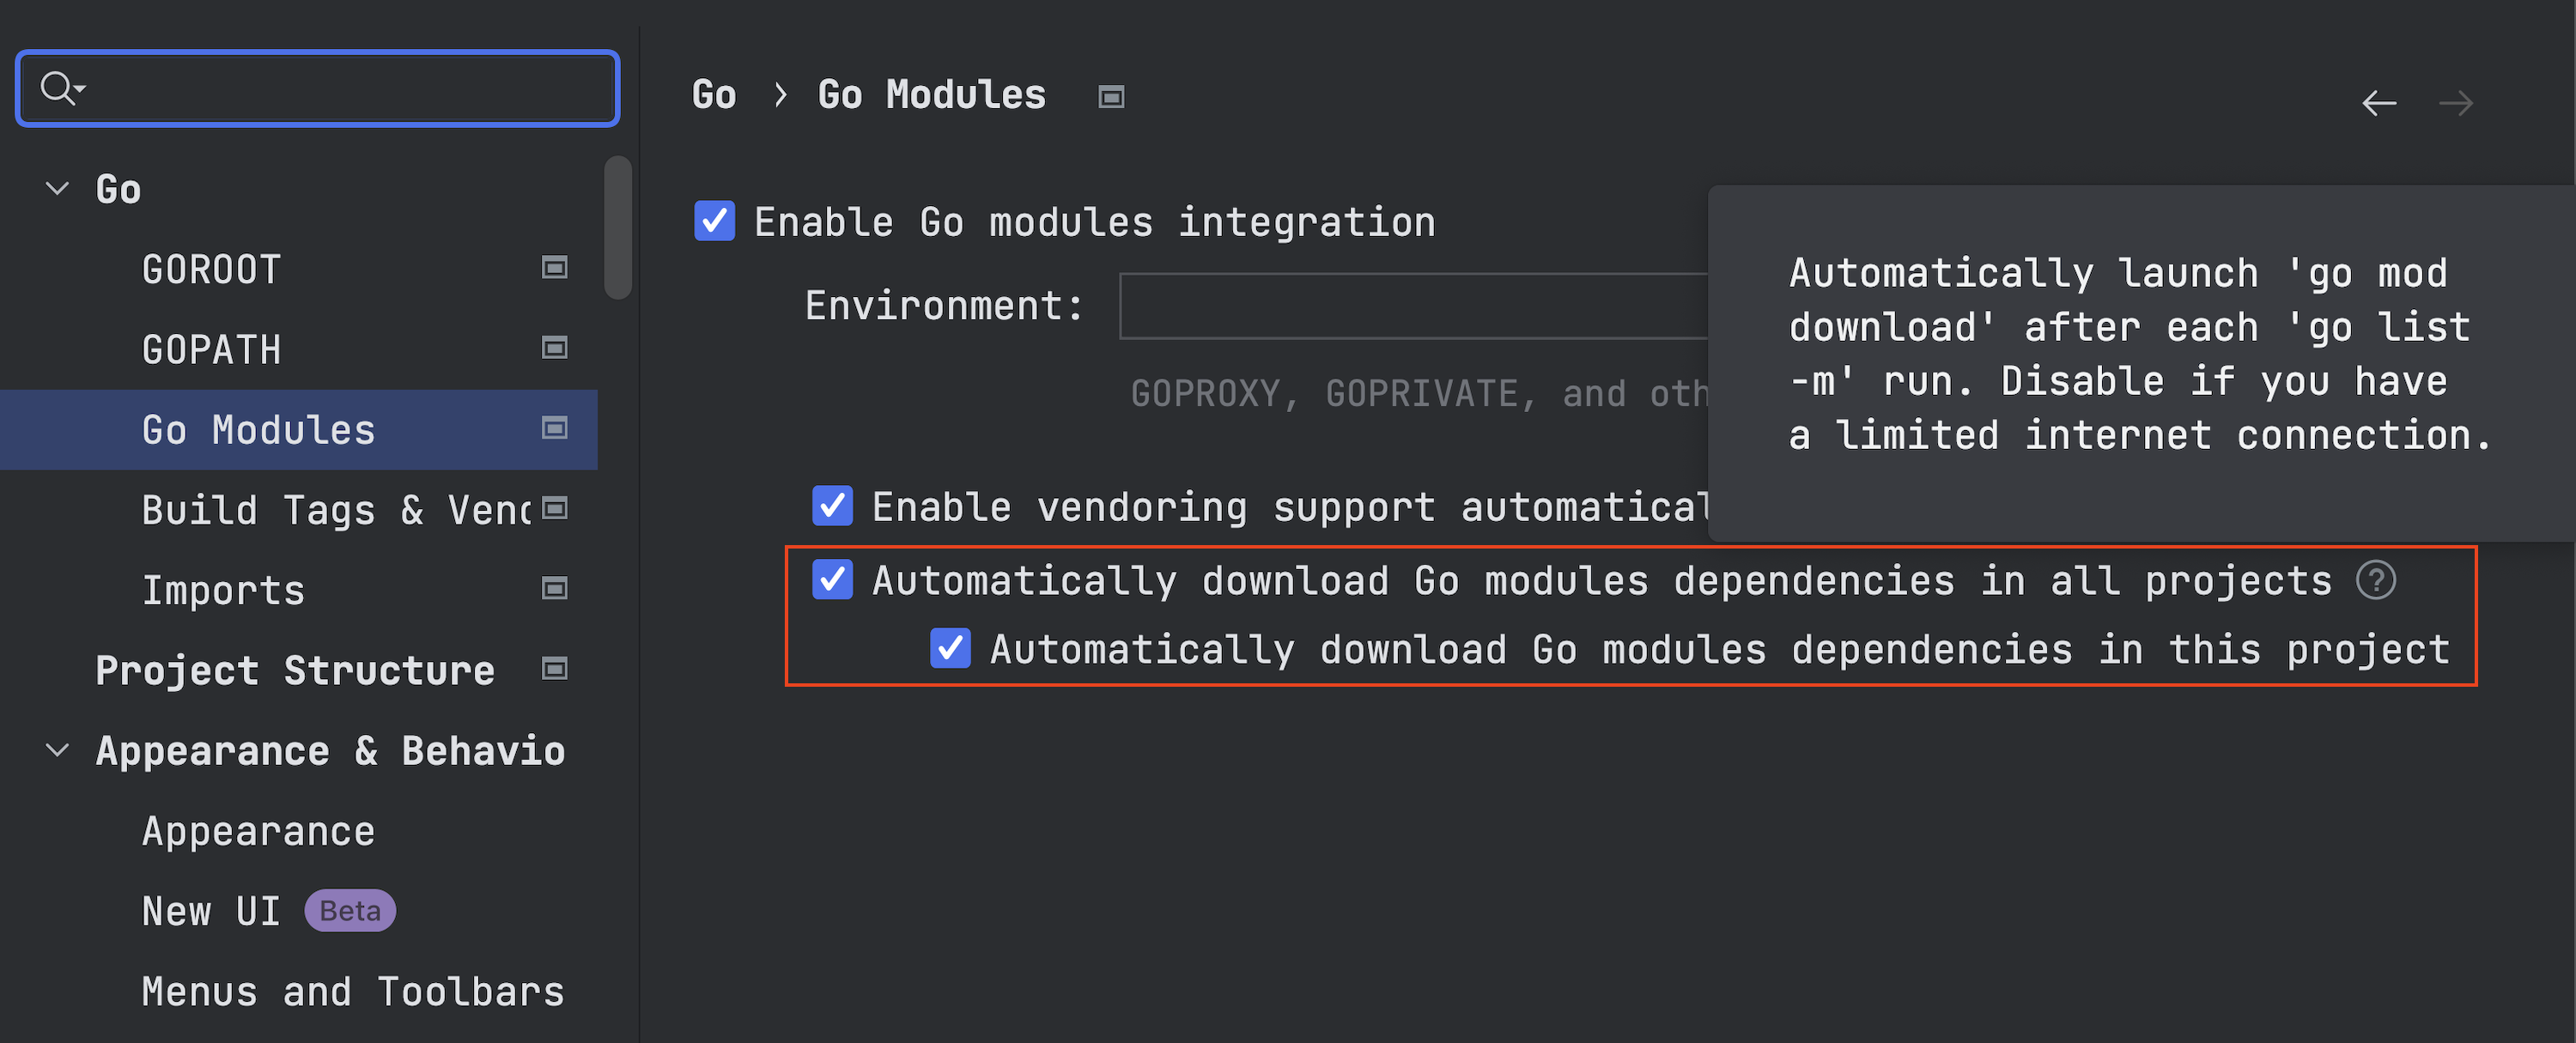 Go modules settings in GoLand